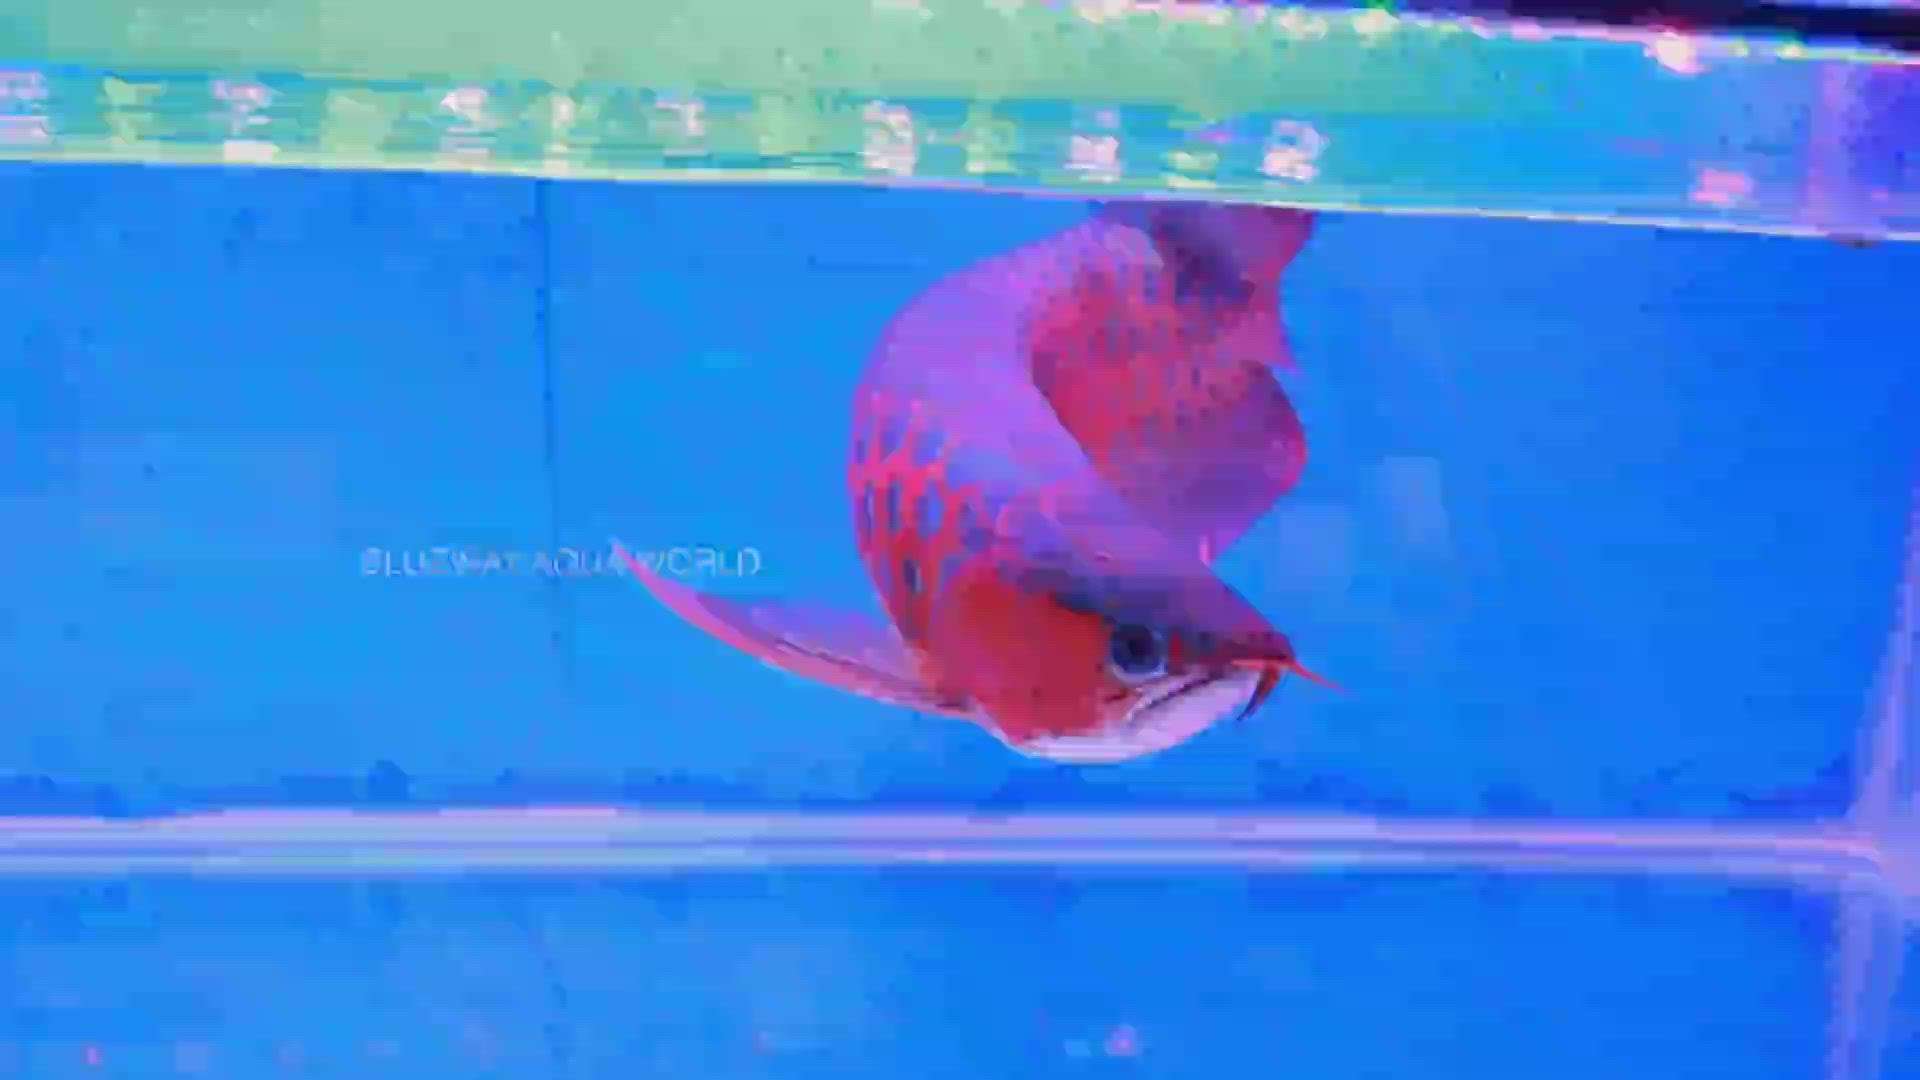 #arowana #superred  #rtg #fish #aquarium  #blueway  #mavelikara